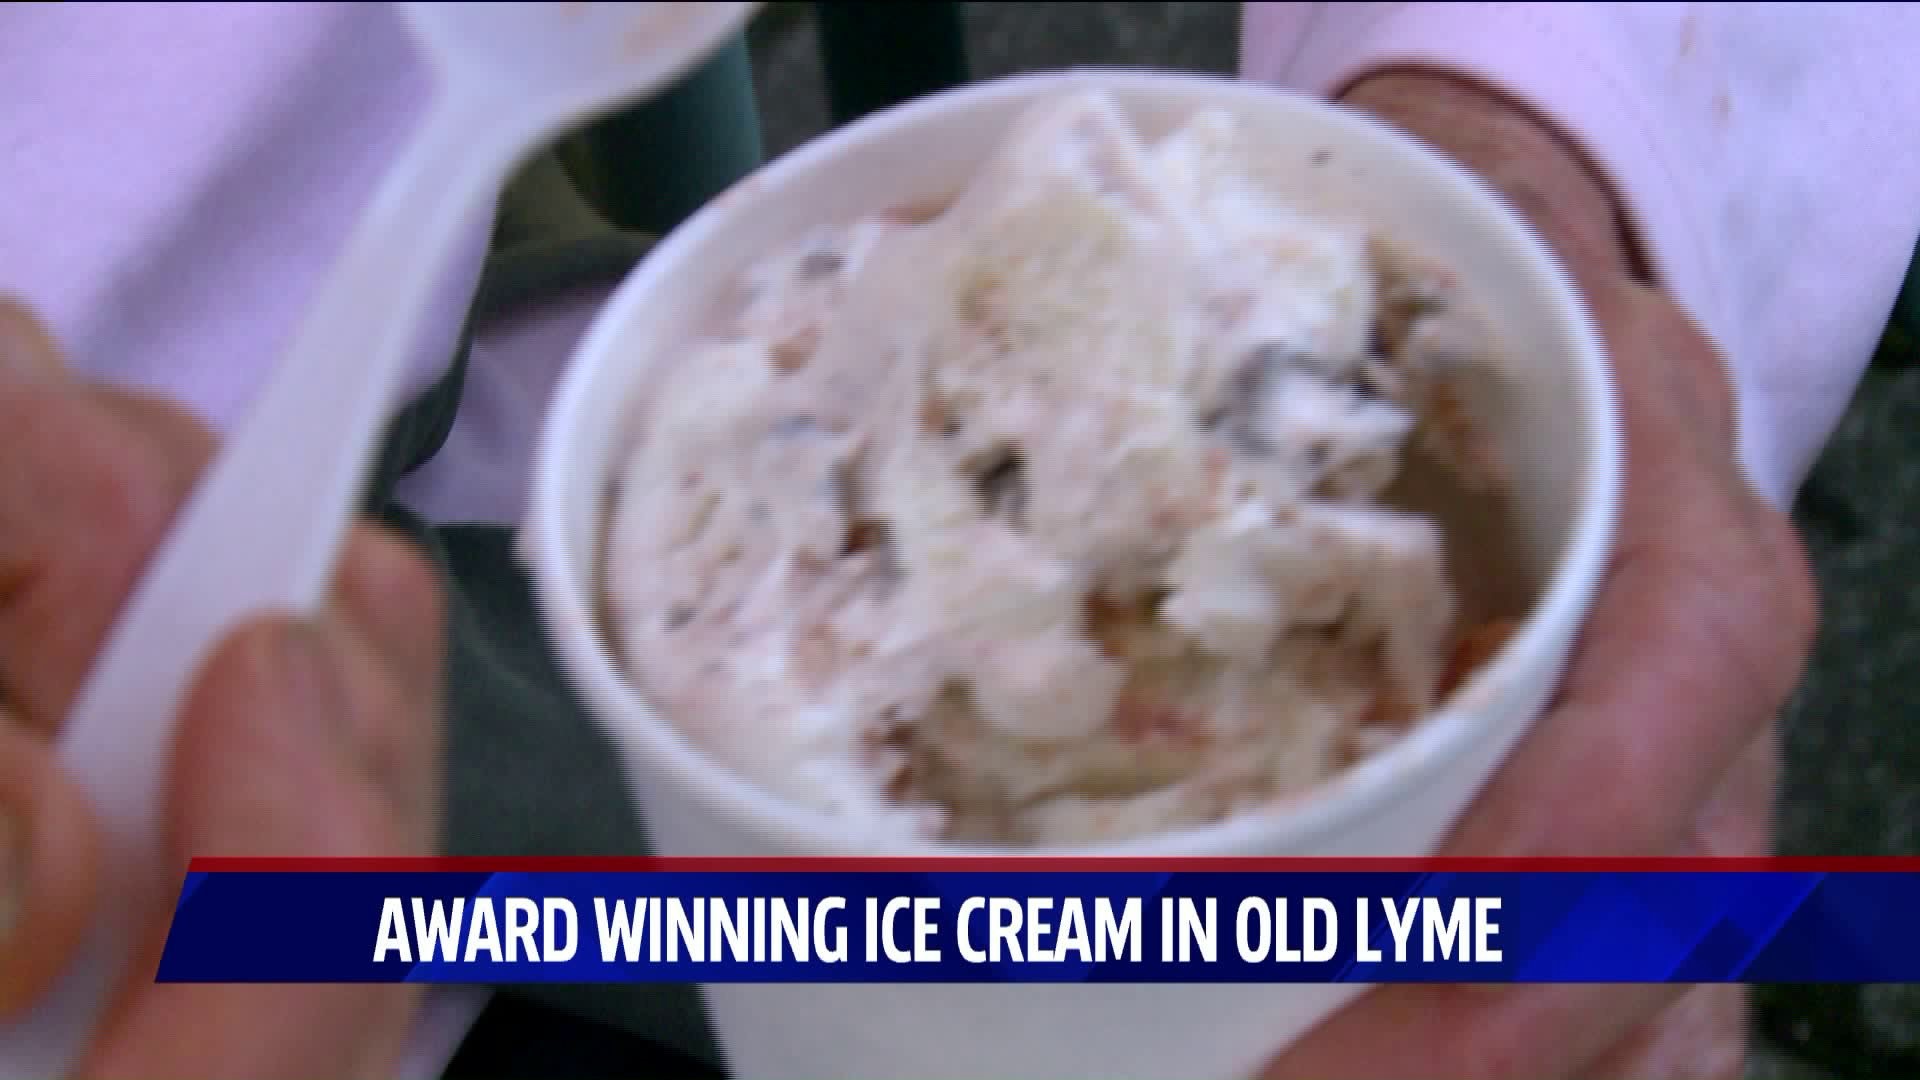 Awatrd winning ice cream in Old Lyme